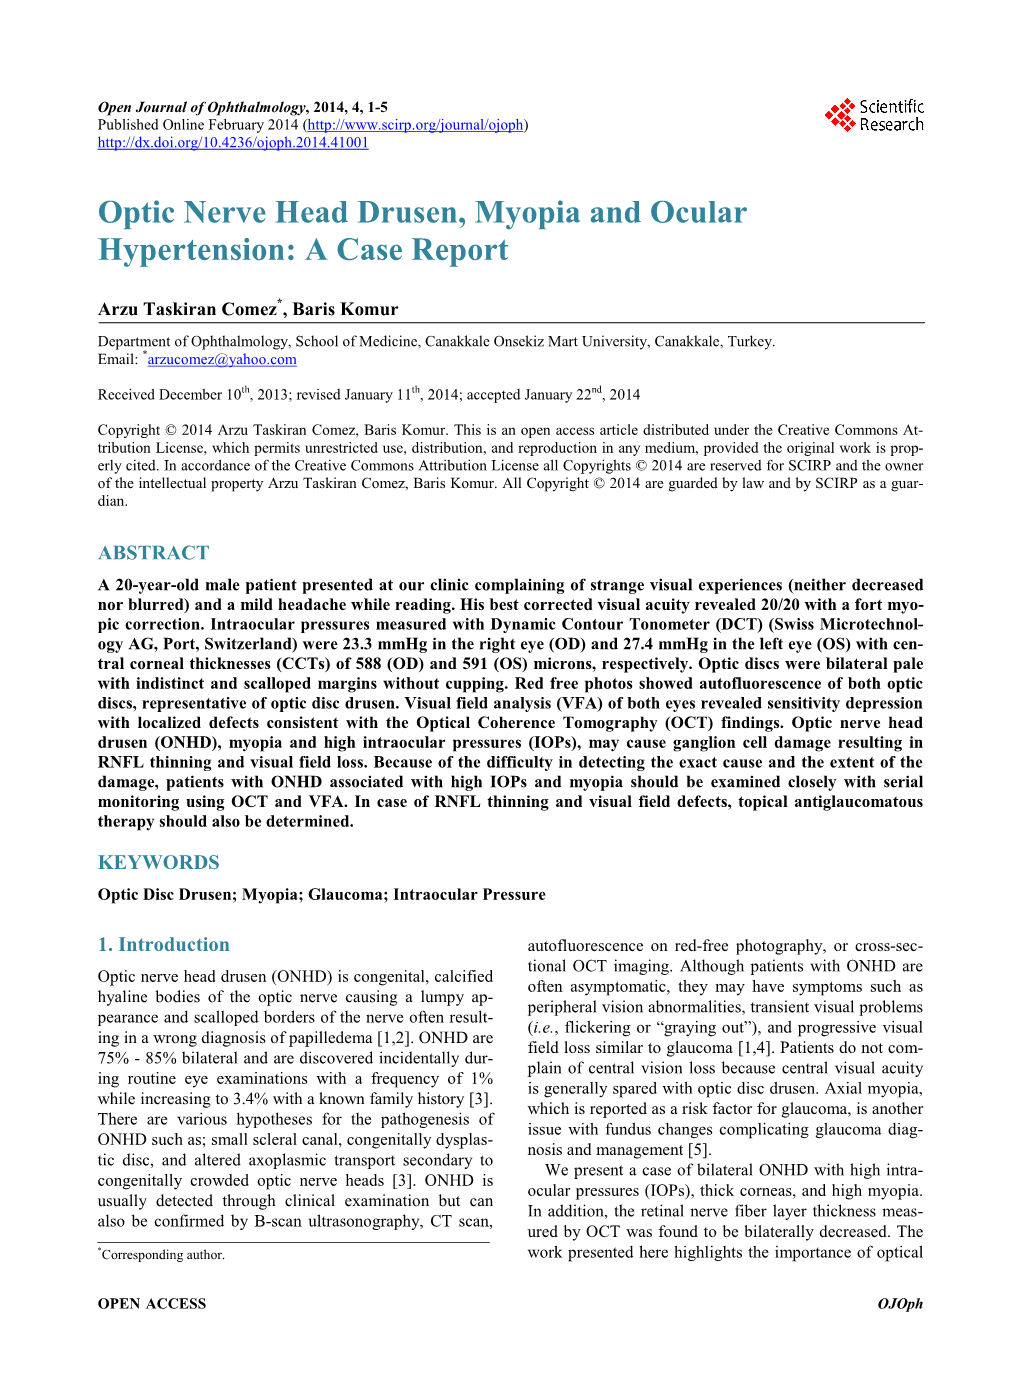 Optic Nerve Head Drusen, Myopia and Ocular Hypertension: a Case Report